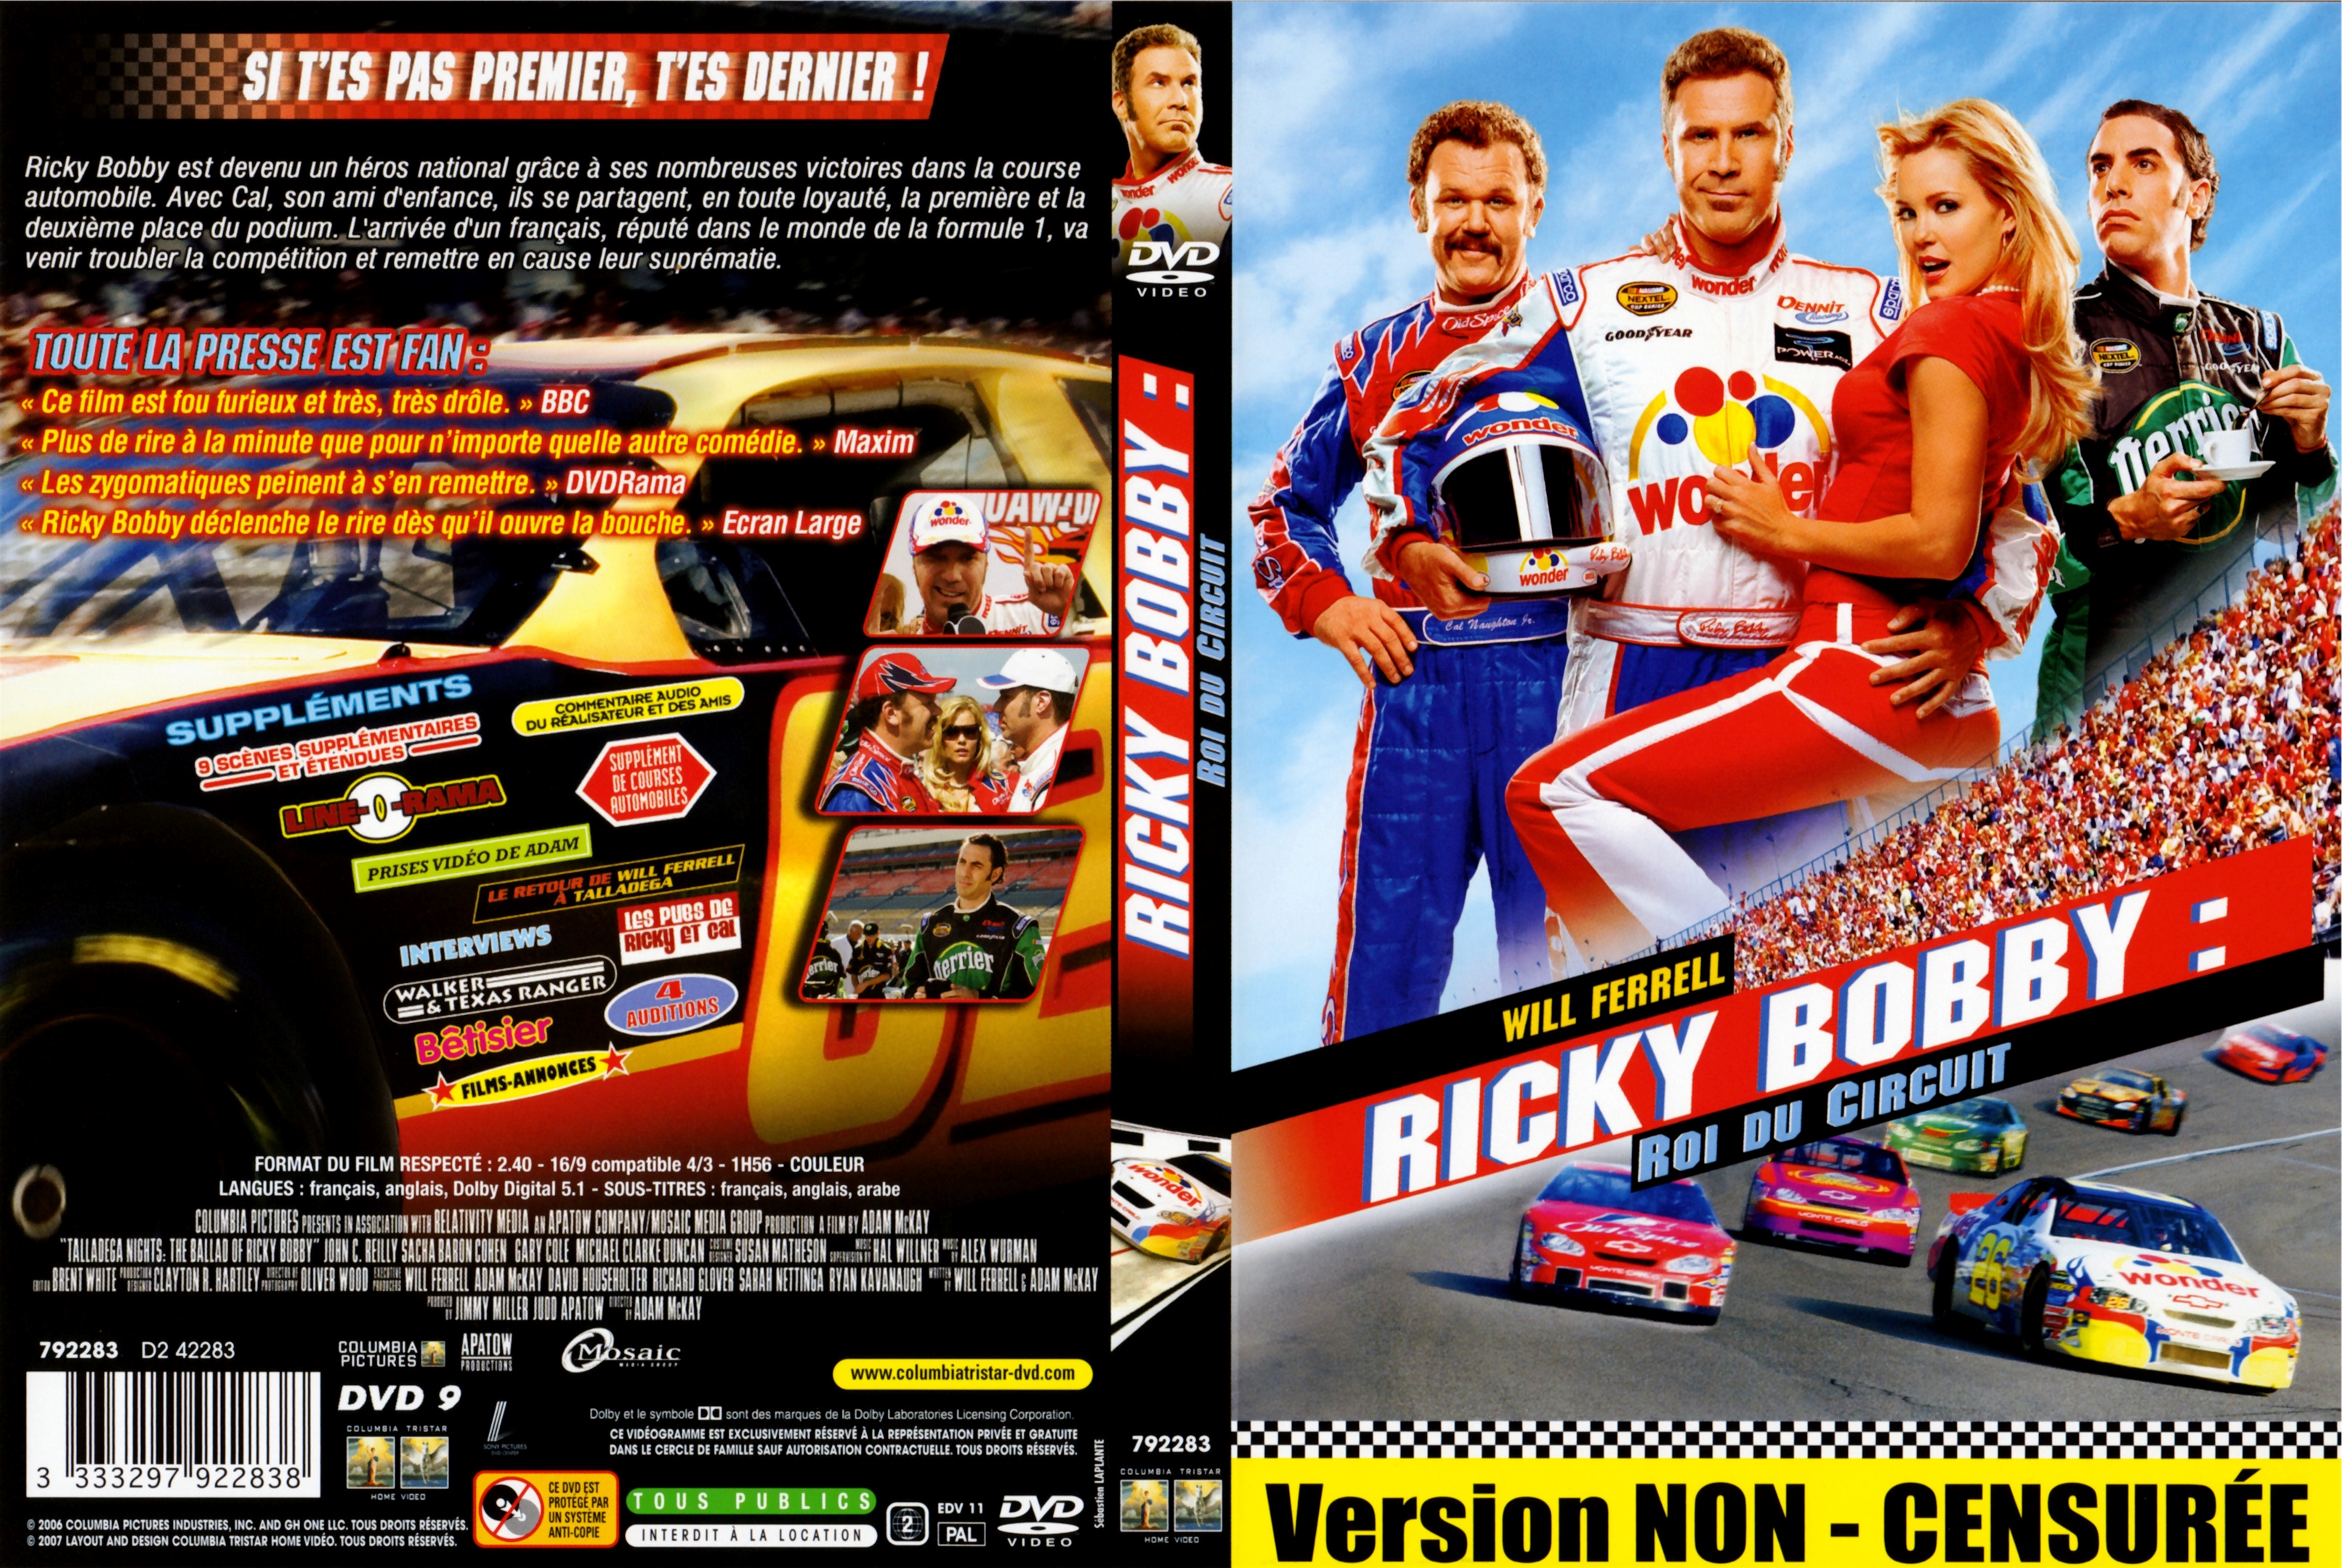 Jaquette DVD Ricky Bobby roi du circuit